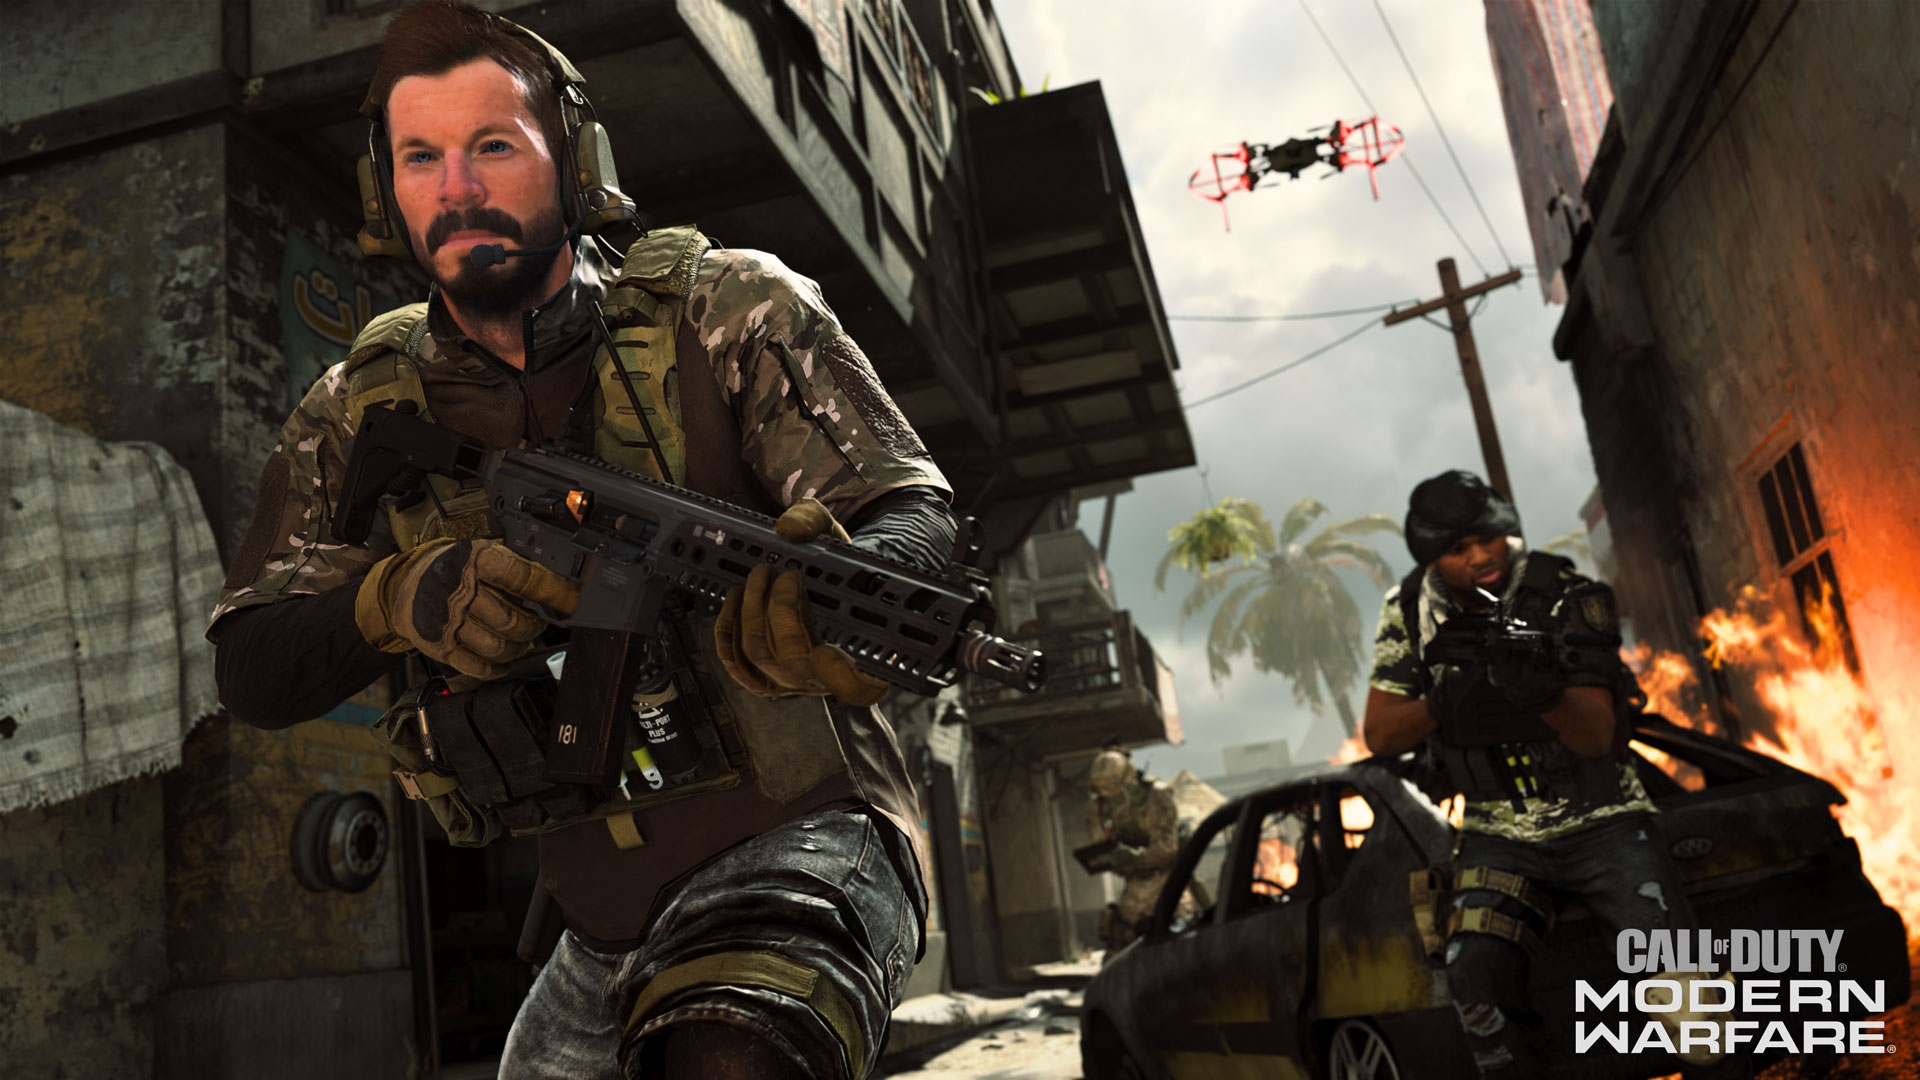 Last Chance for Season Three Battle Pass Gear in Call of Duty®: Modern Warfare®!